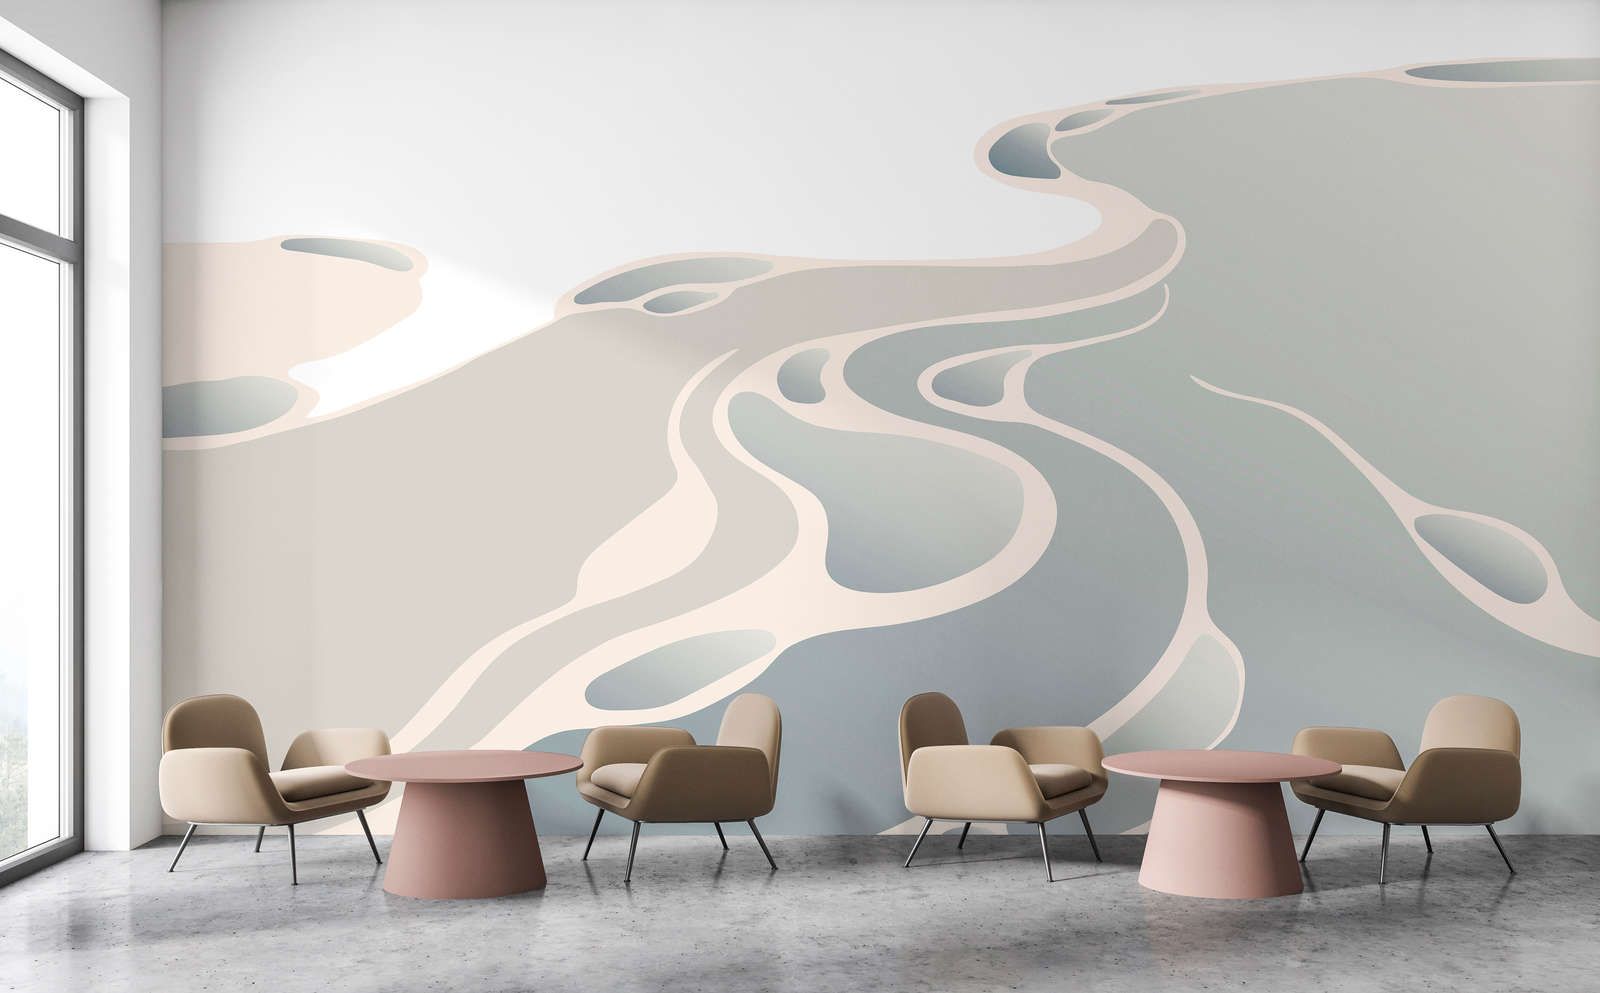             Photo wallpaper »delta« - Abstract desert landscape - Smooth, slightly shiny premium non-woven fabric
        